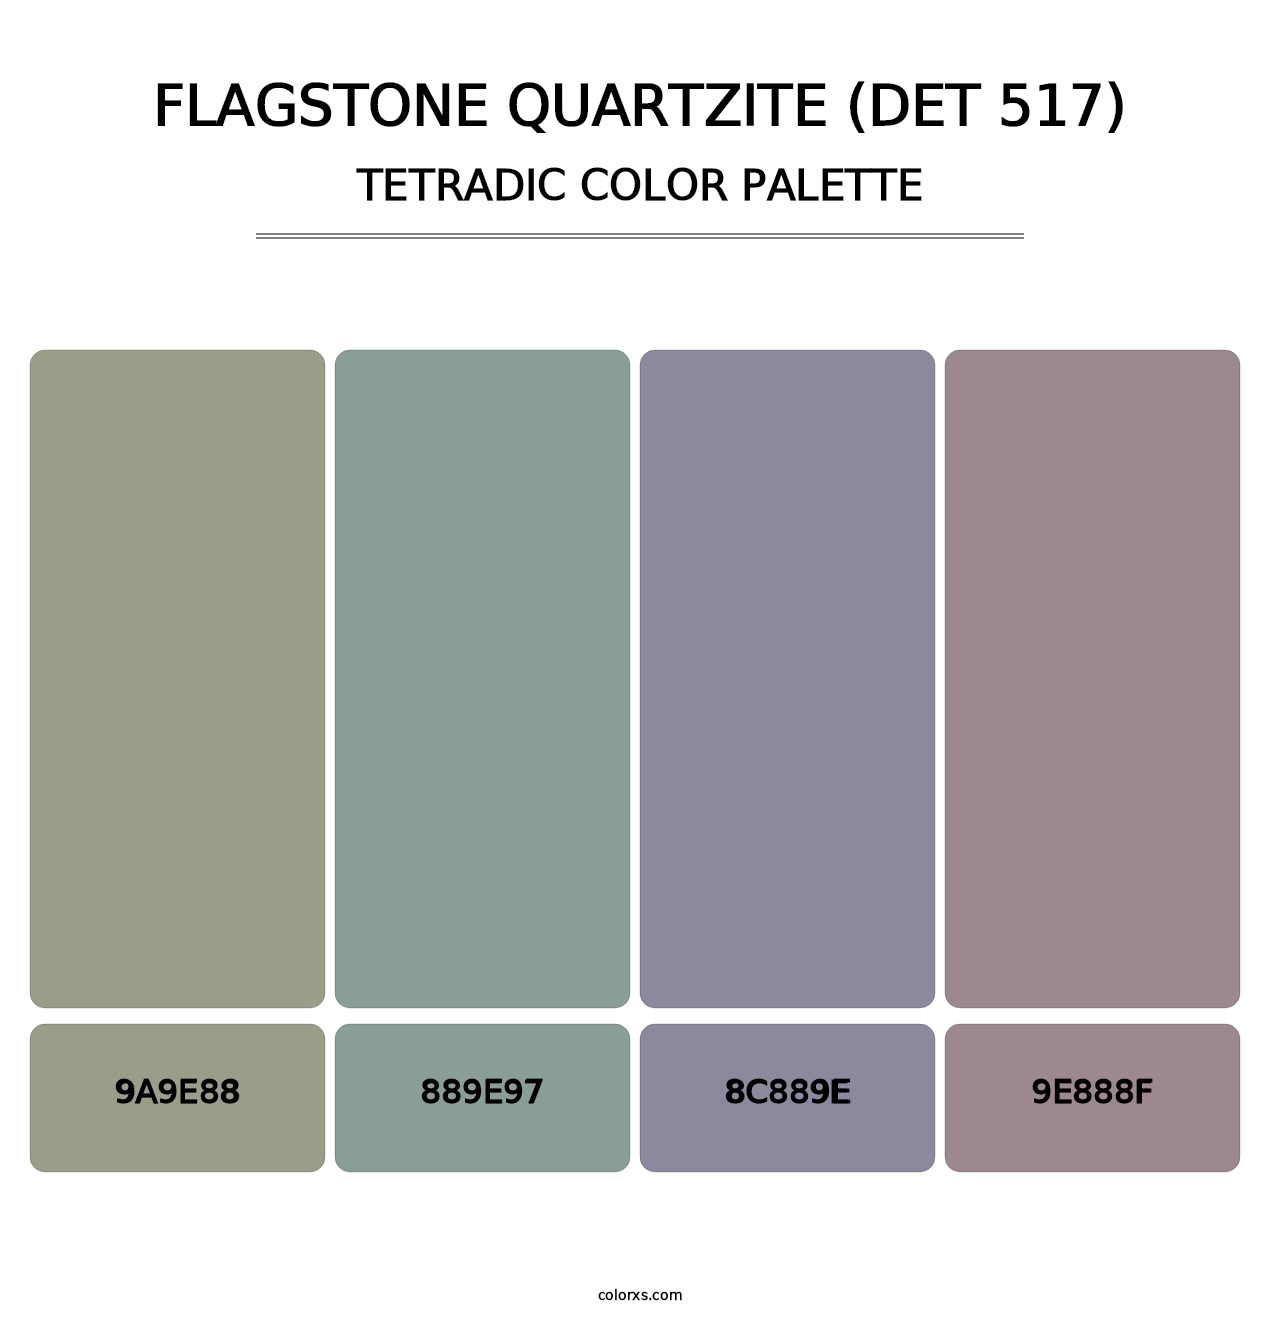 Flagstone Quartzite (DET 517) - Tetradic Color Palette